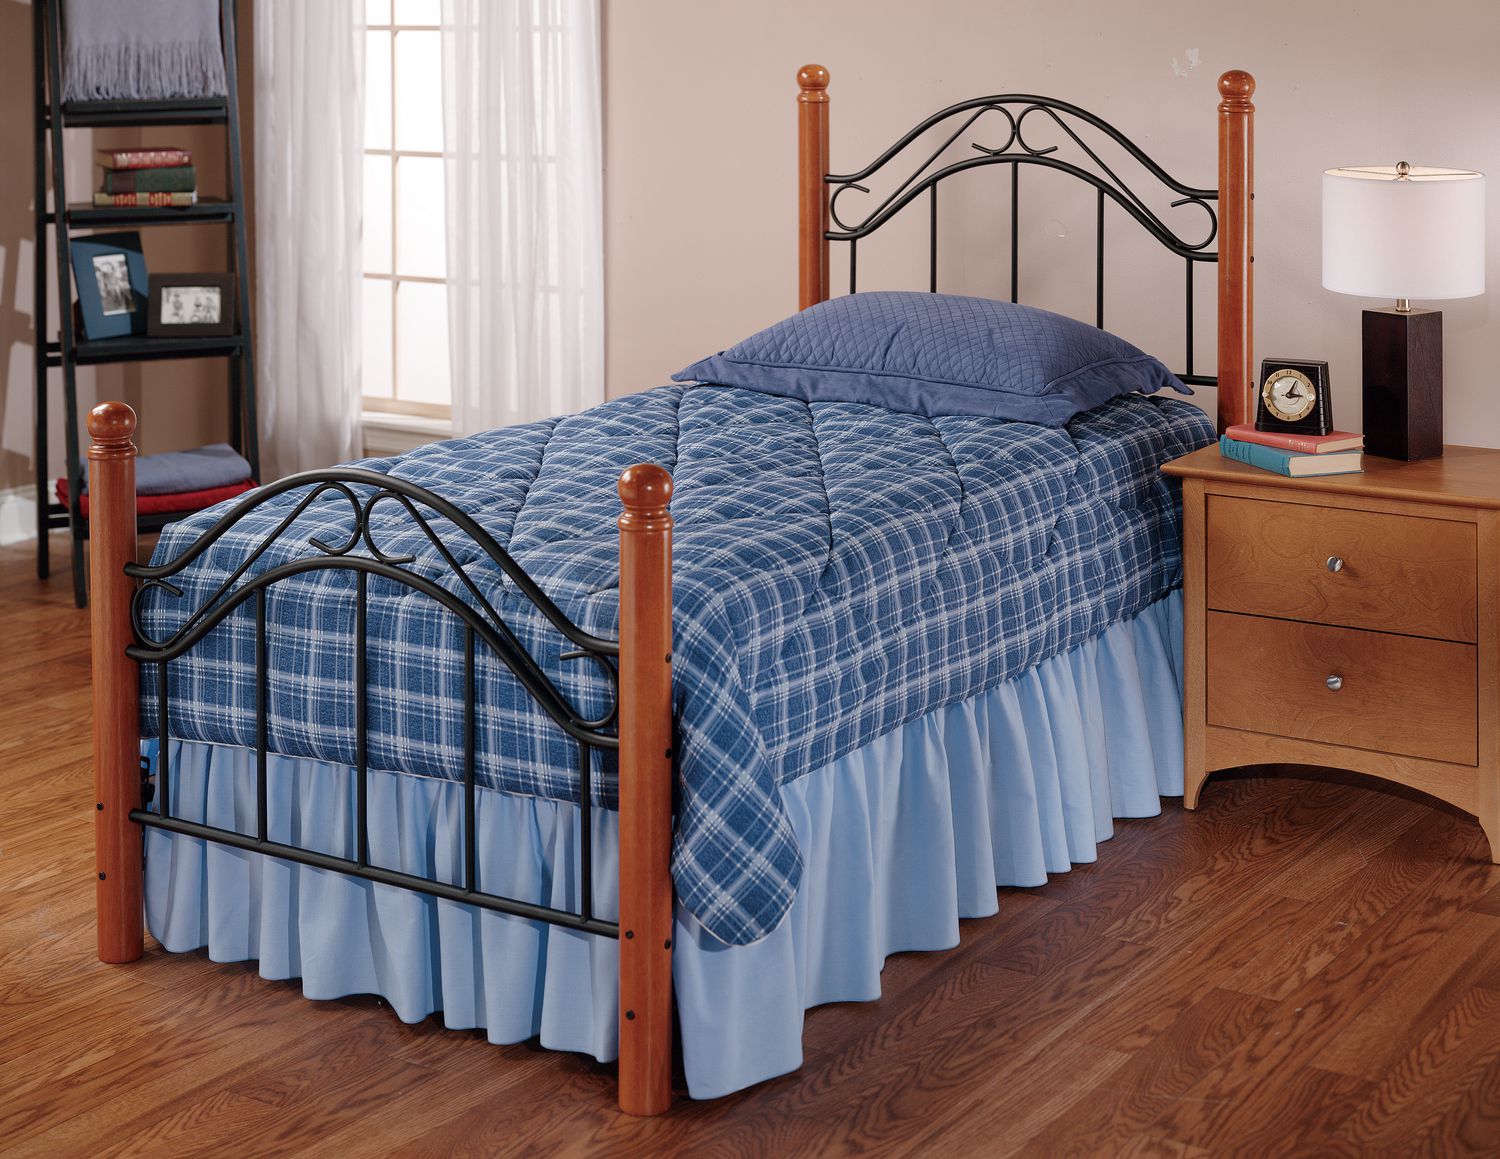 air bed mattress walmart twin size bed